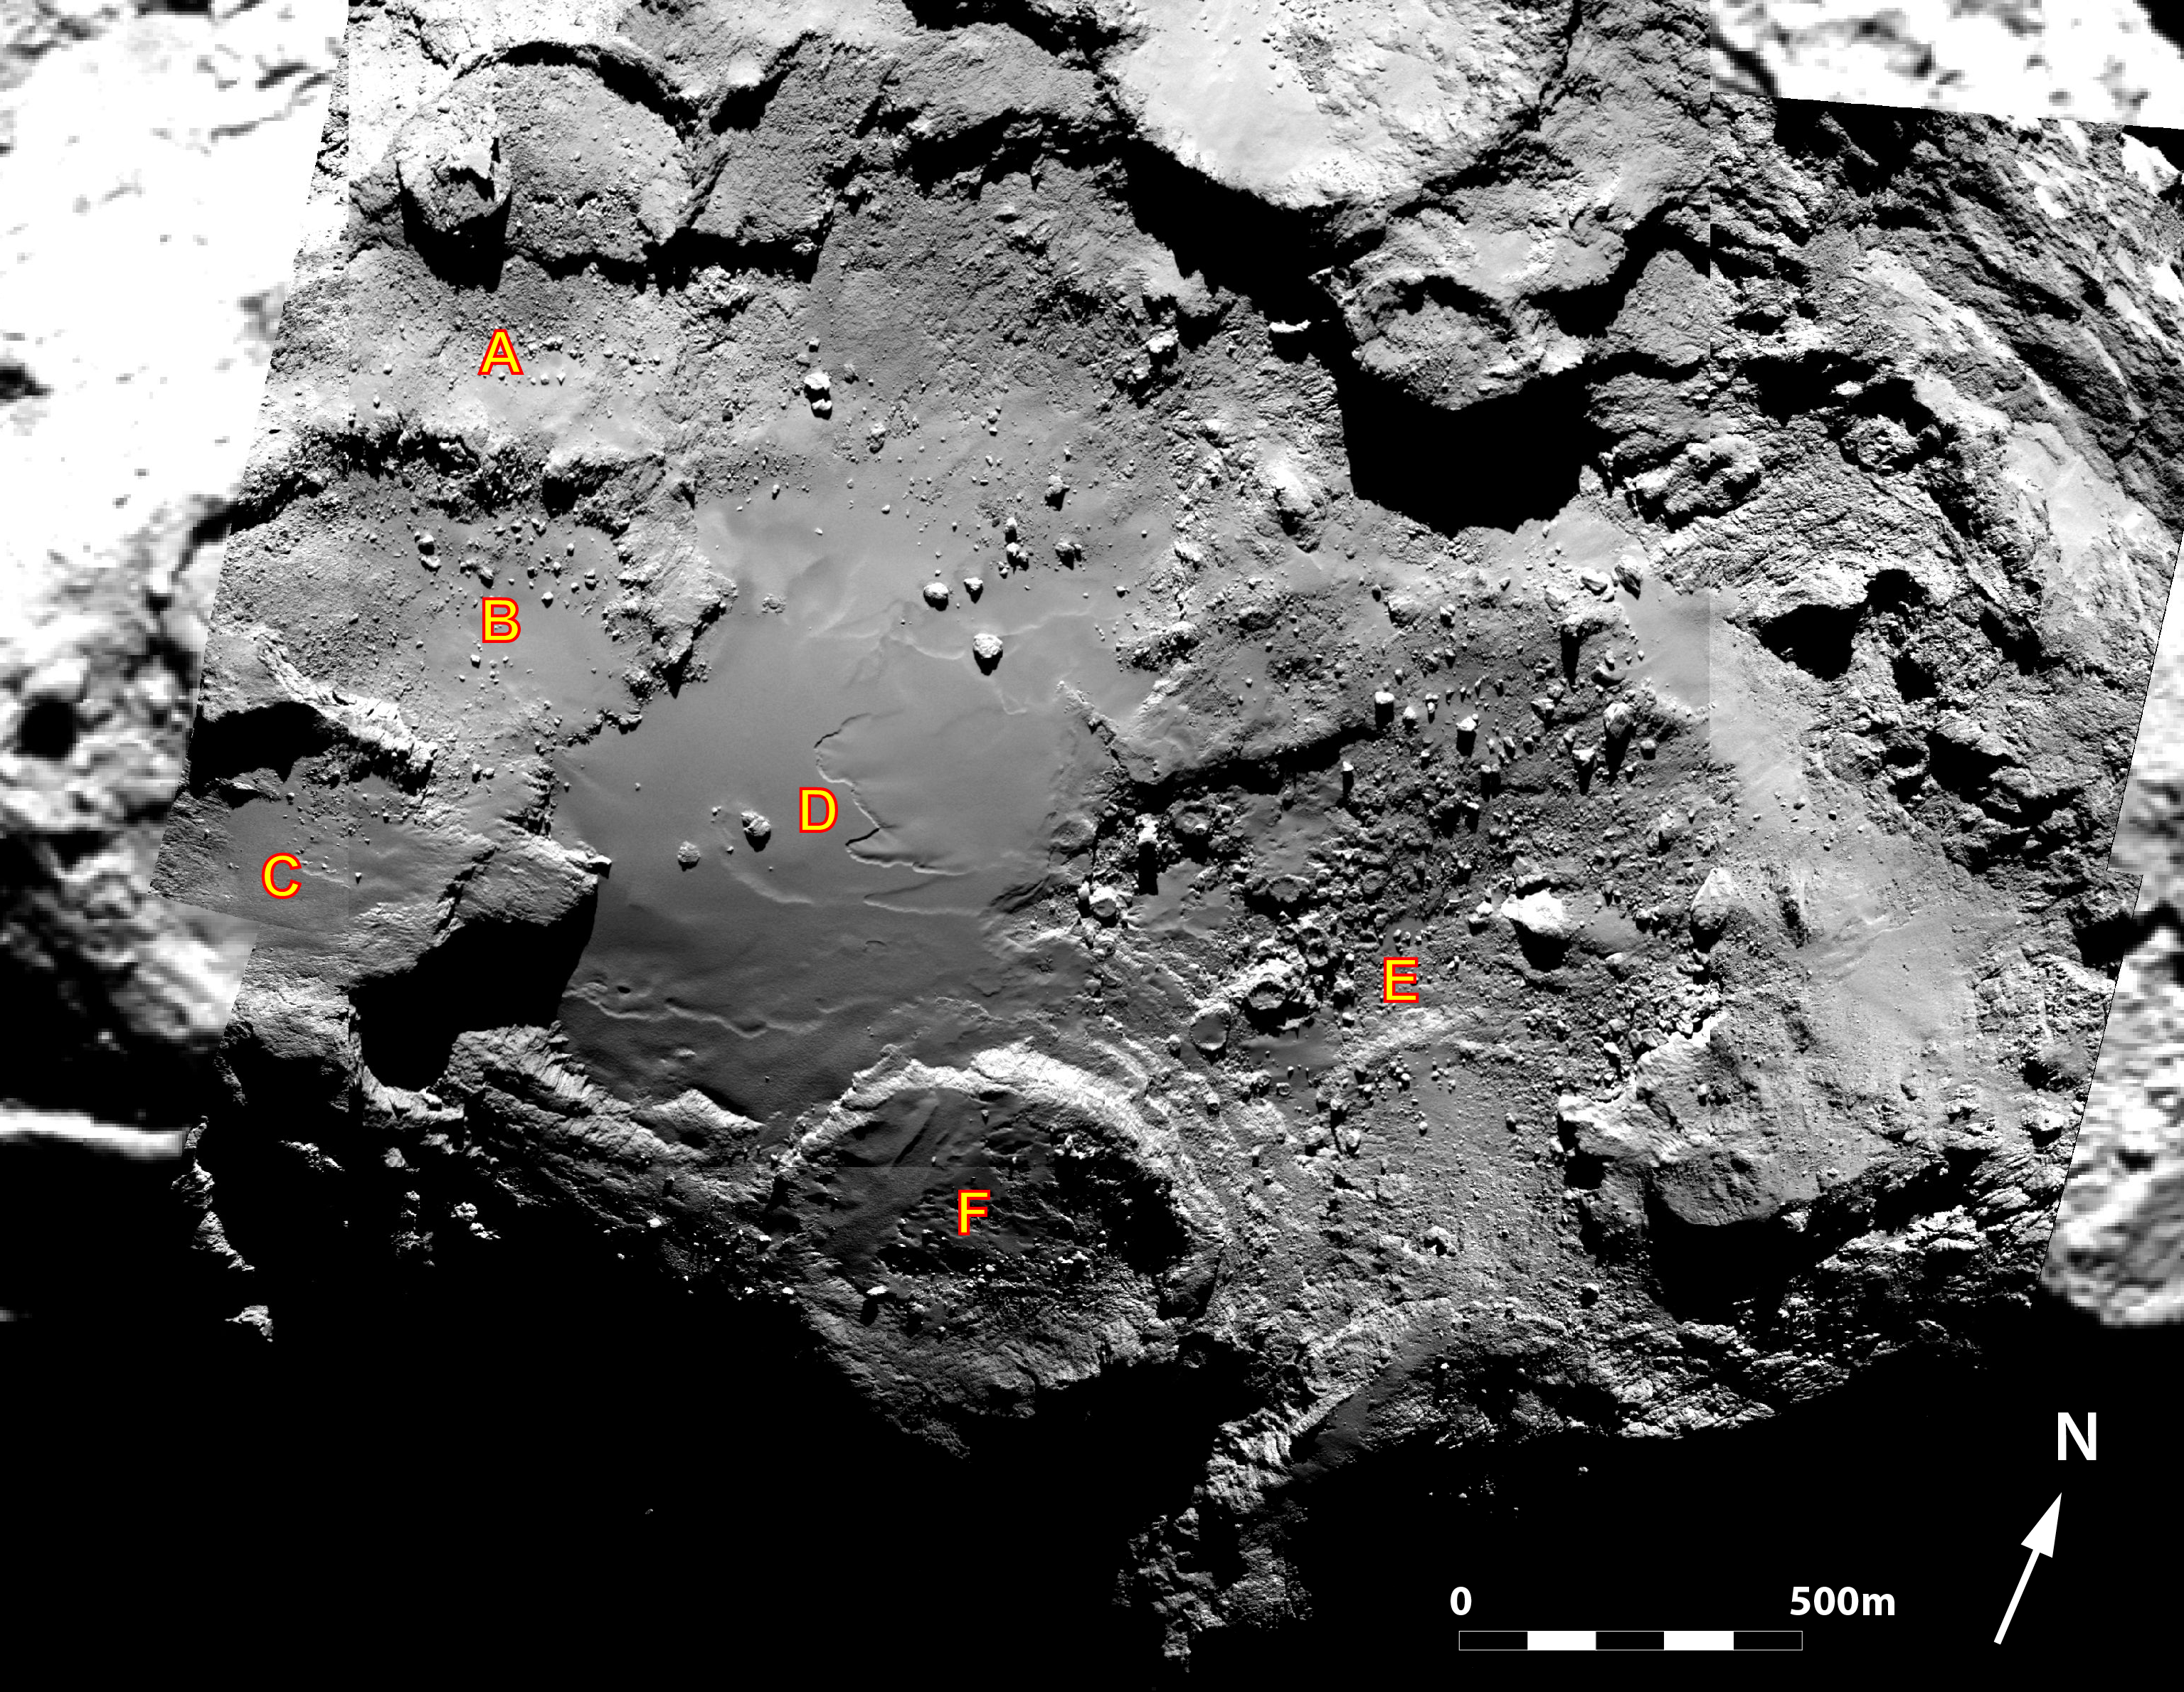 Accumulation basins identified within the Imhotep region on Comet 67P/Churyumov-Gerasimenko. (Image: ESA/Rosetta/MPS for OSIRIS Team MPS/UPD/LAM/IAA/SSO/INTA/UPM/DASP/IDA)